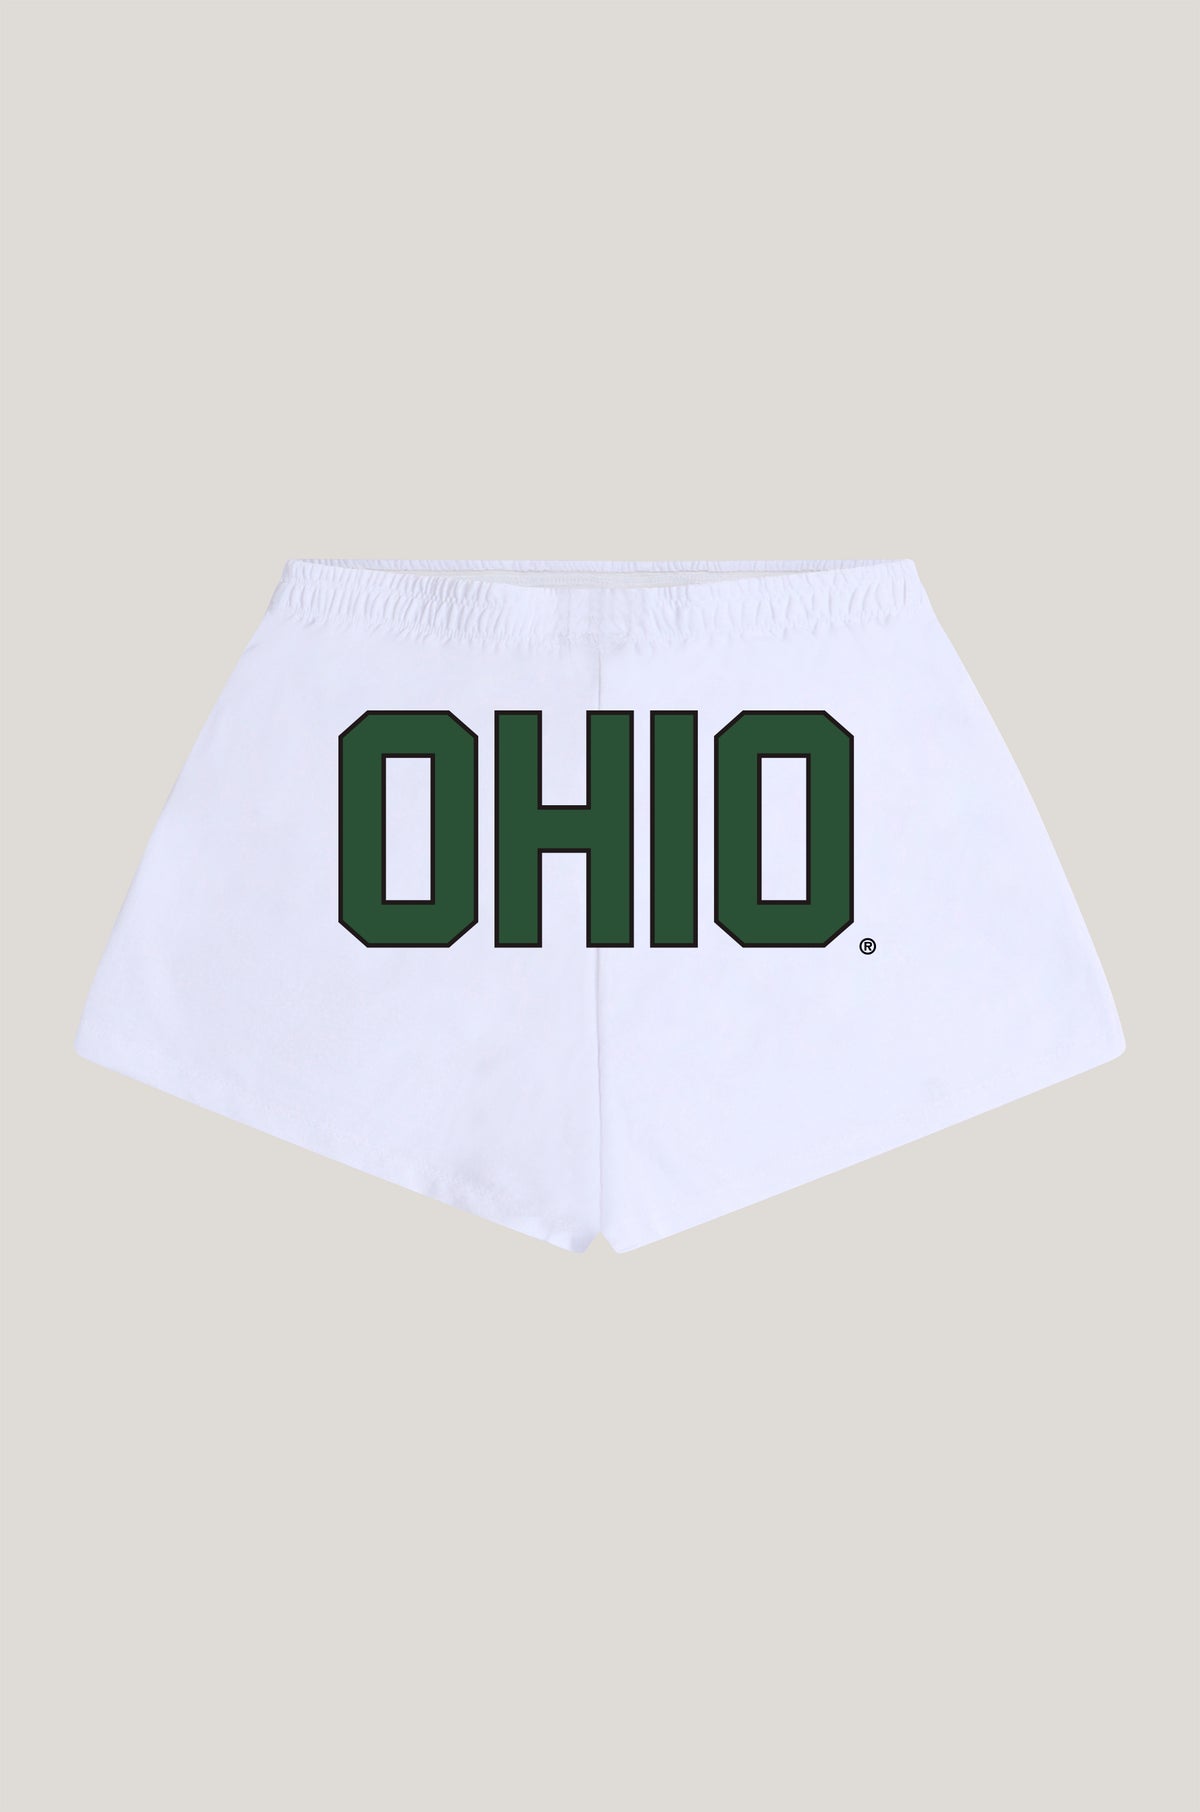 Ohio University P.E. Shorts